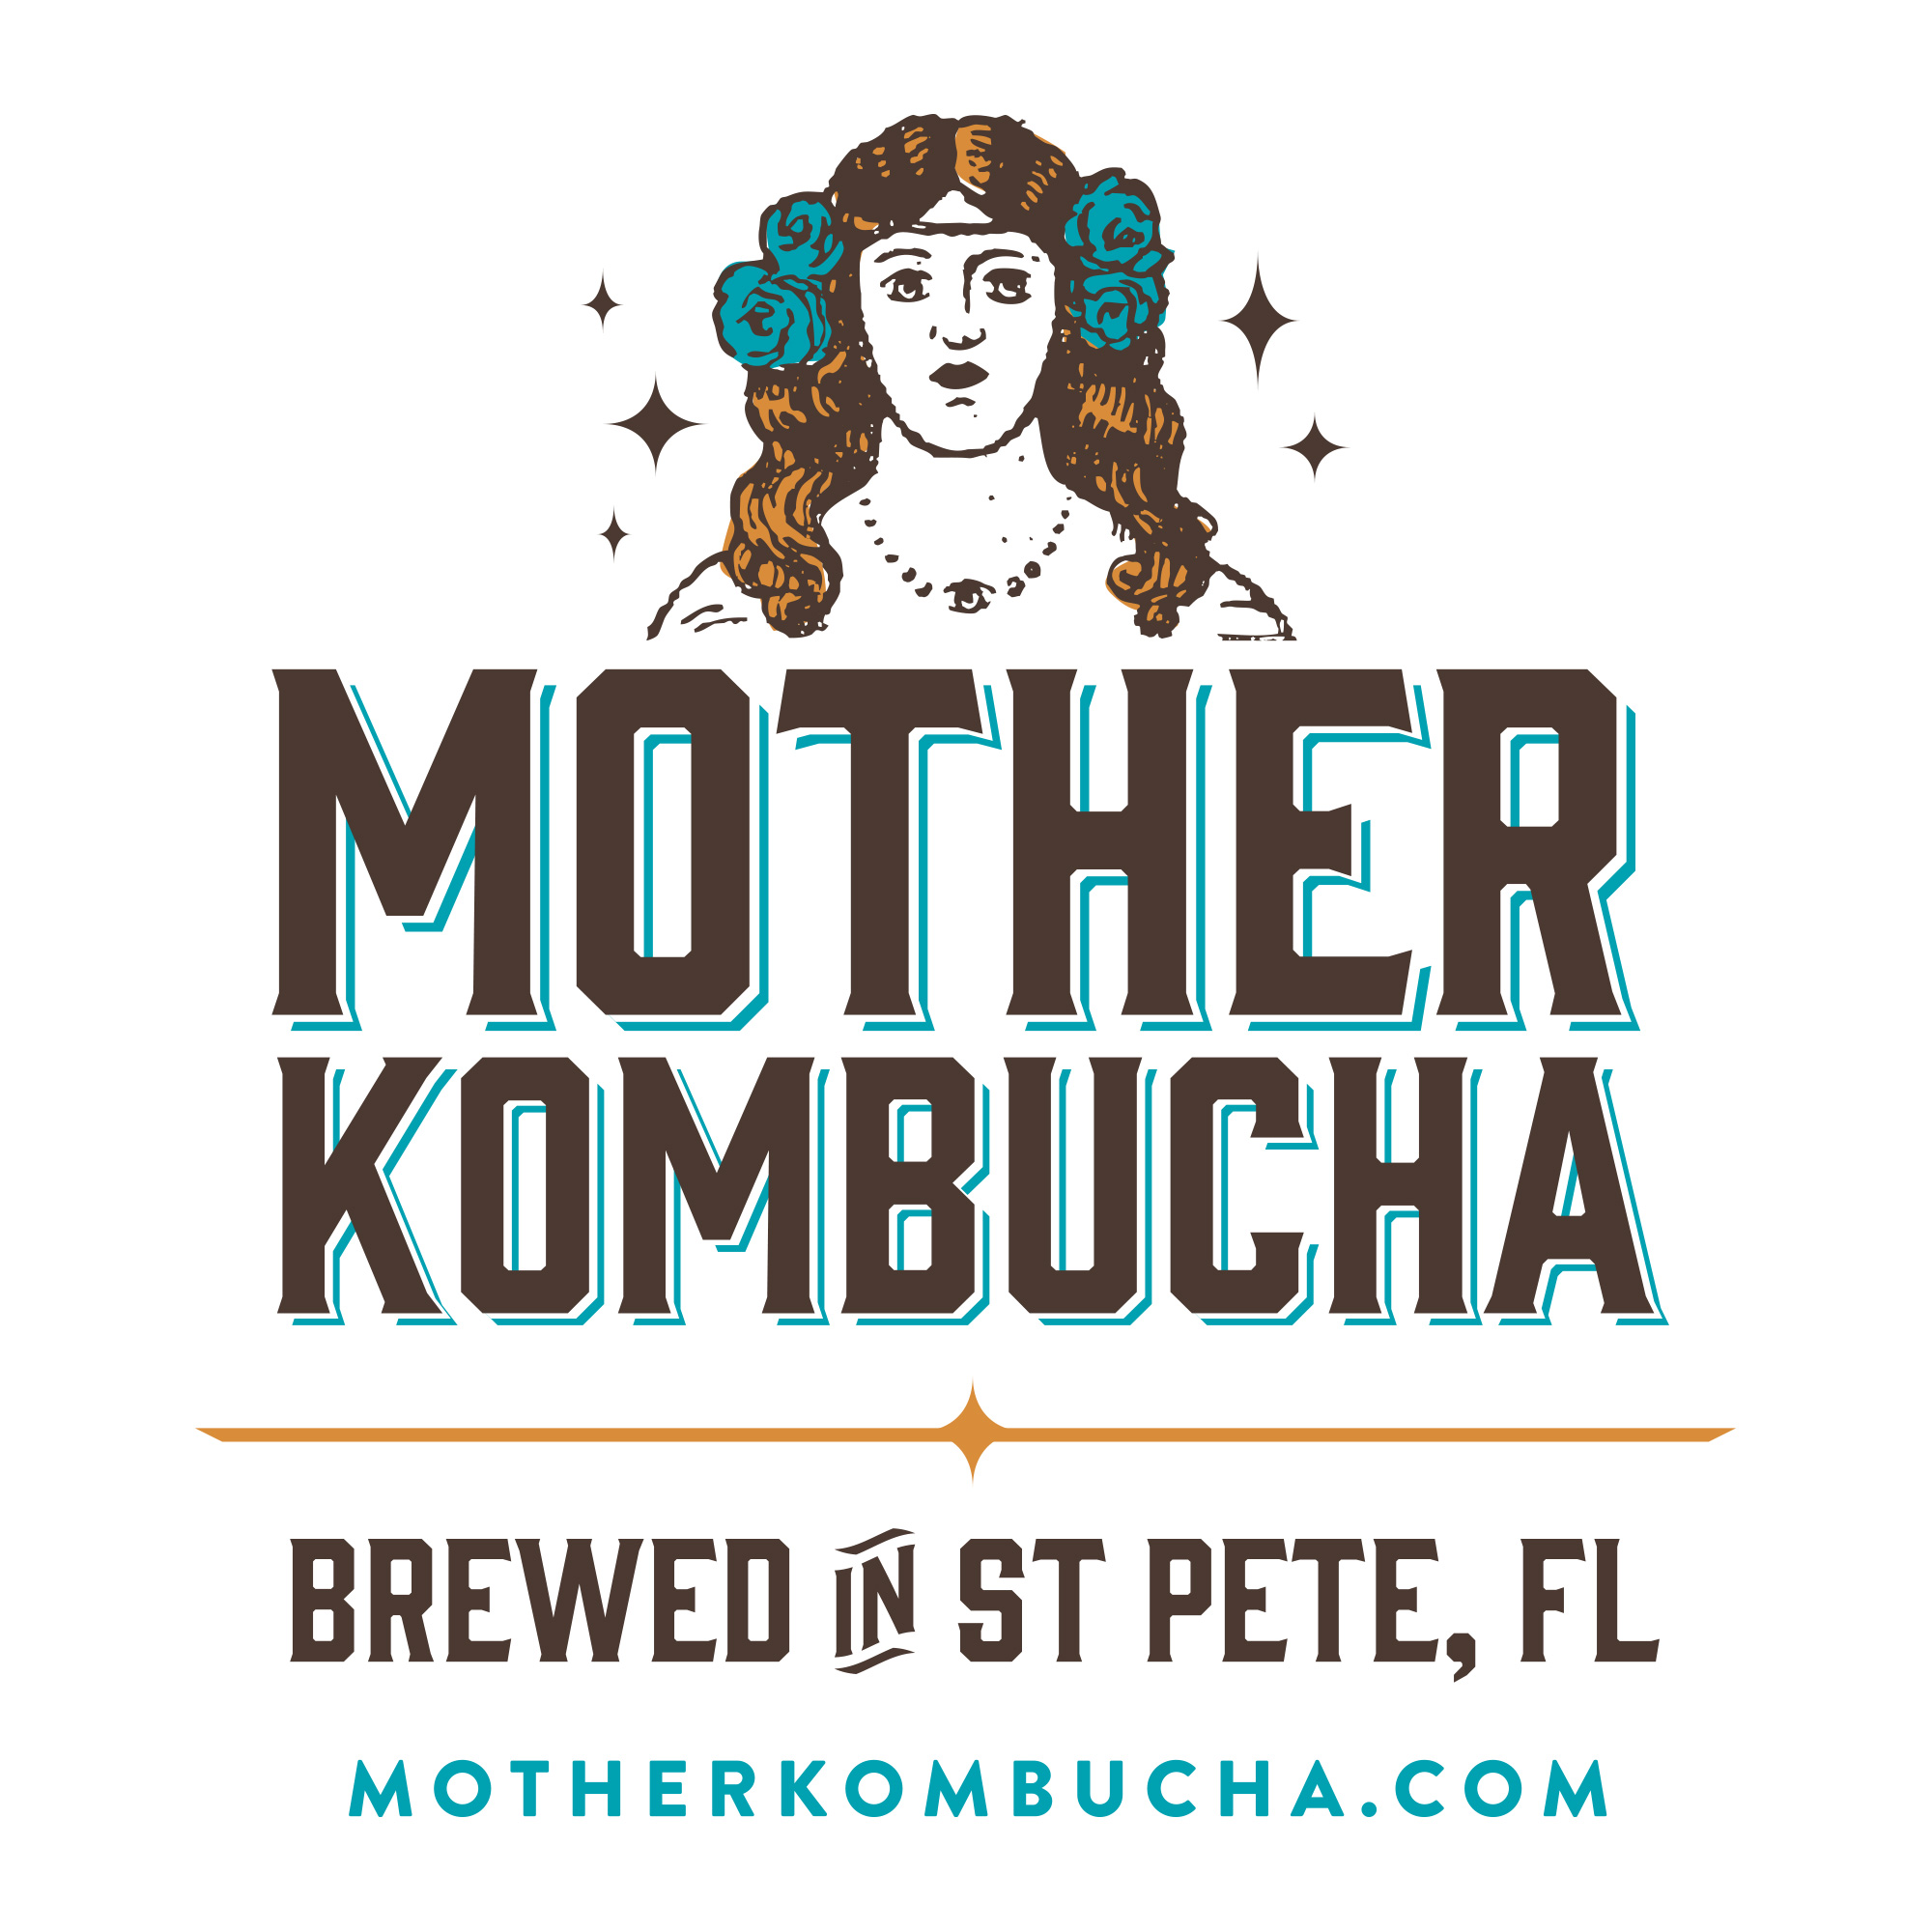 Mother Kombucha